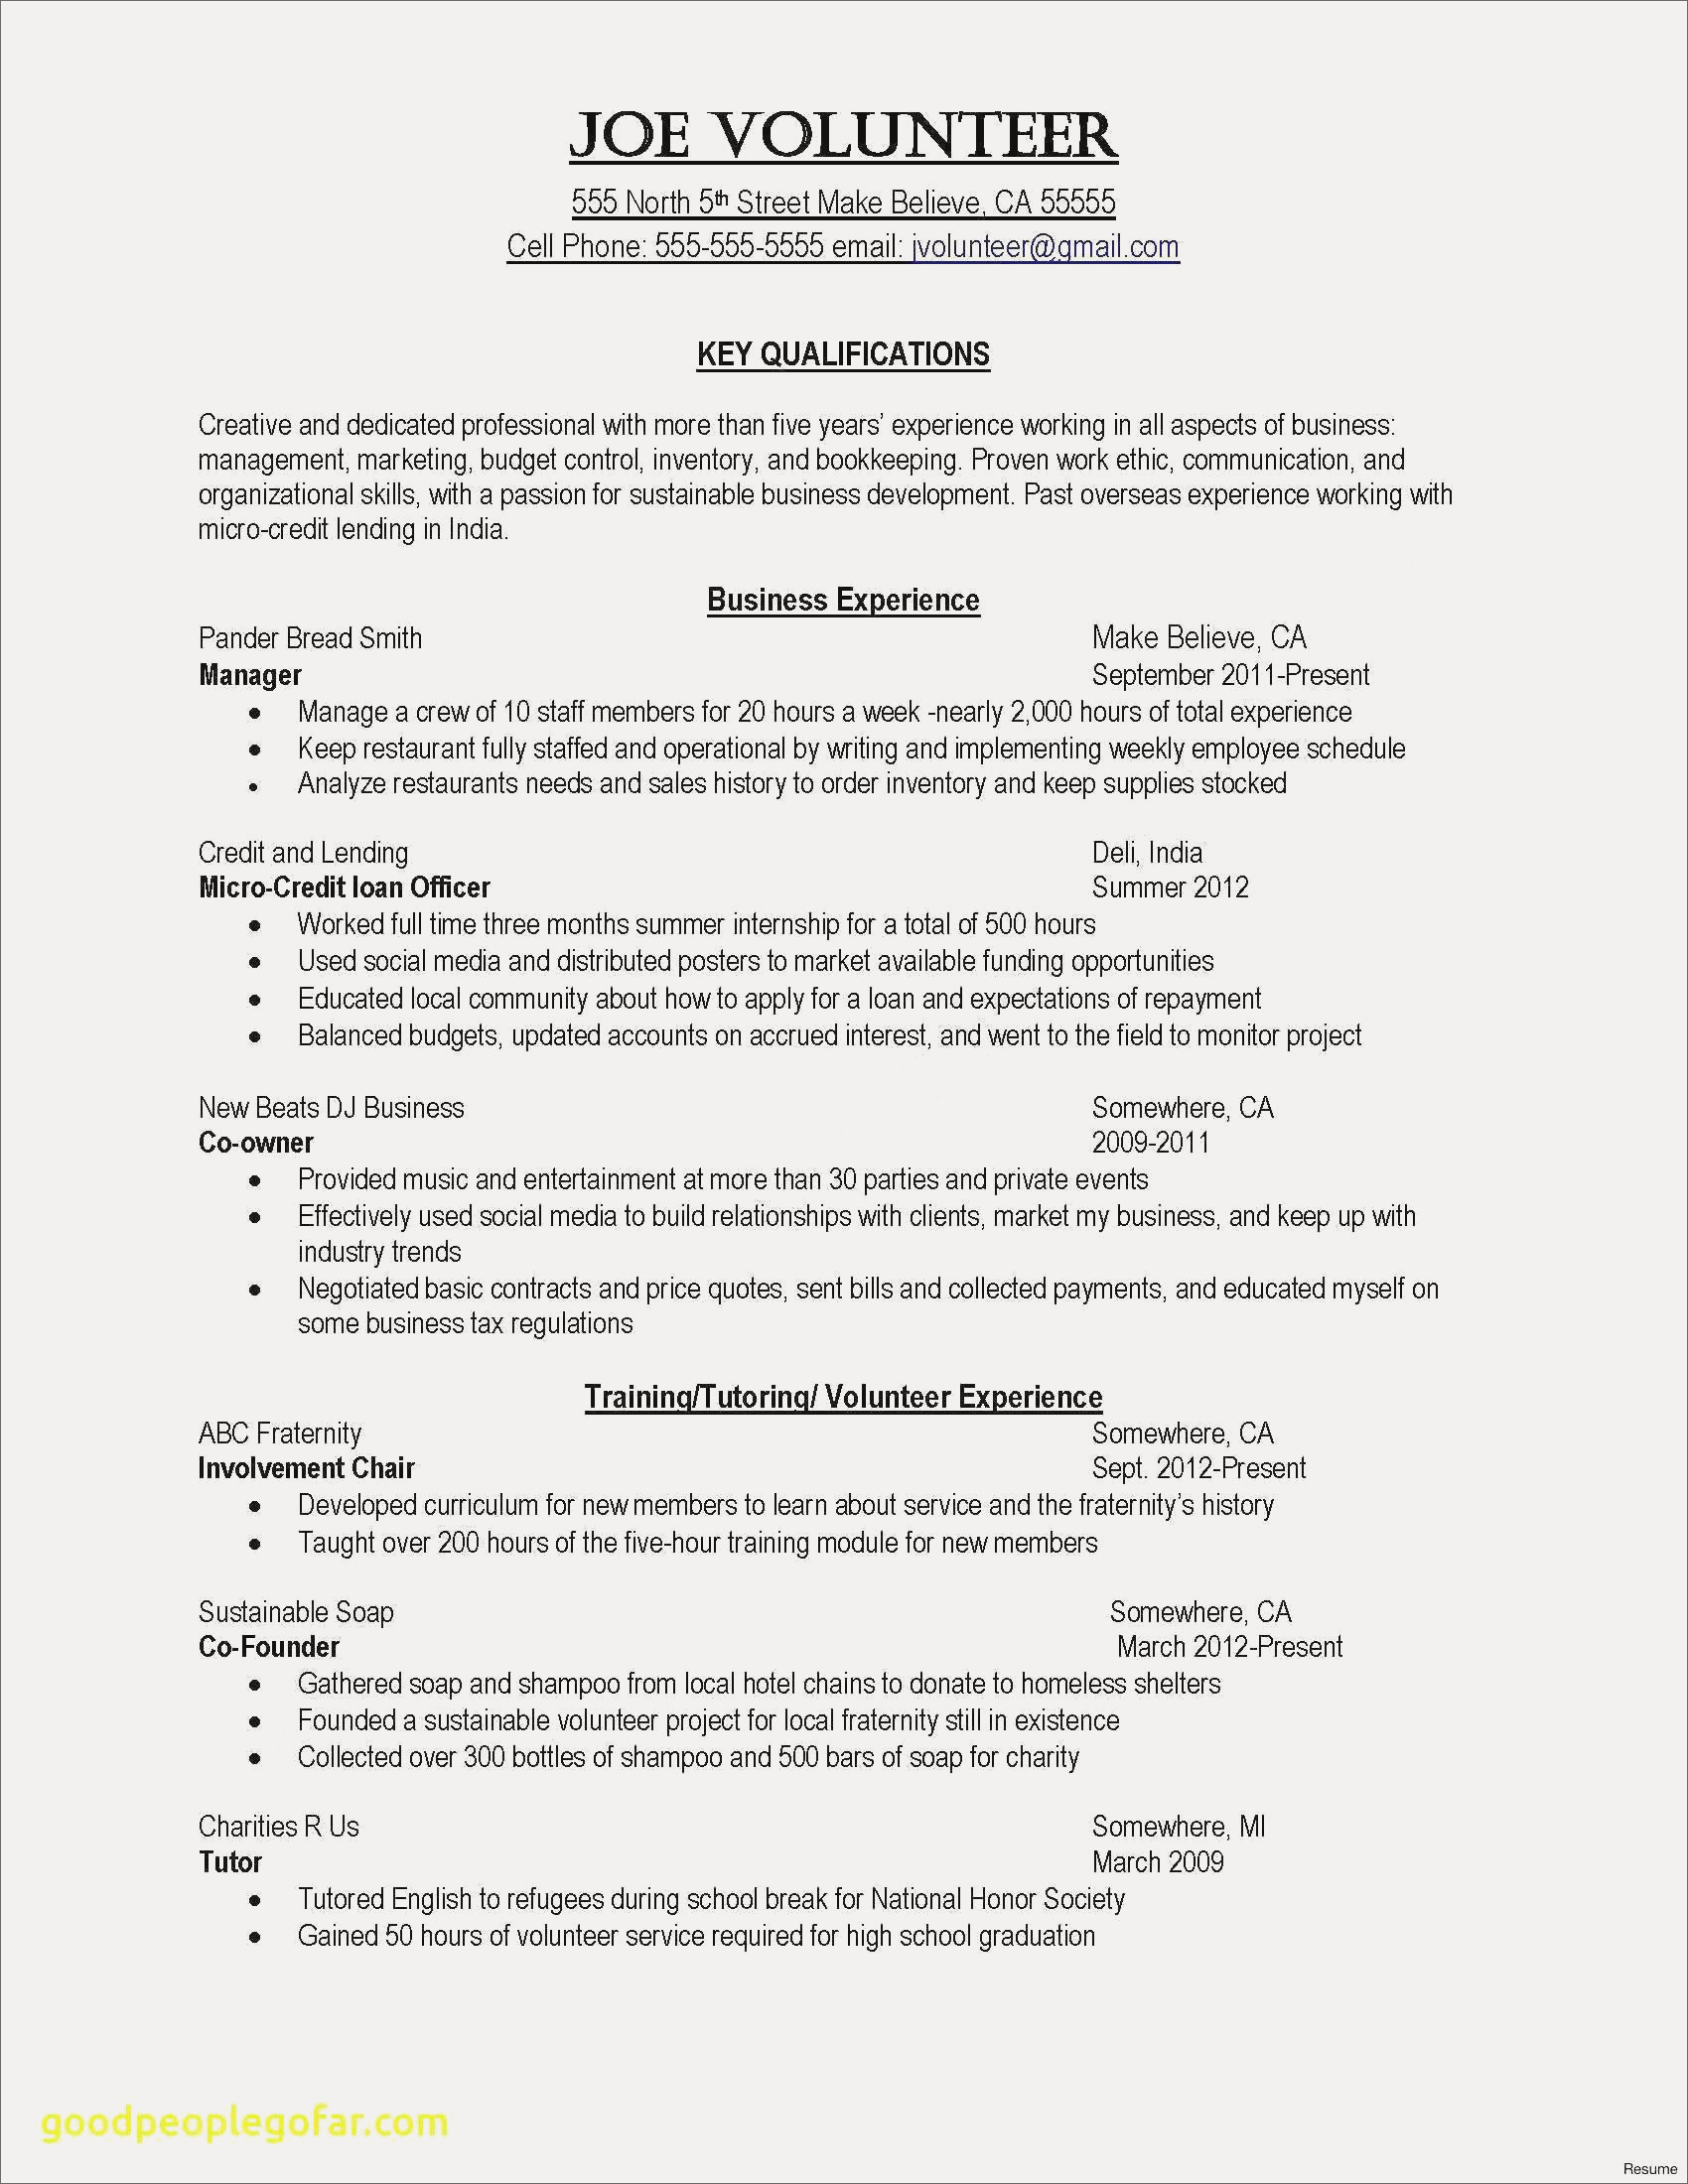 Rn Resume Examples Nursing Resume Template 99 Free Rn Resume Template Of Nursing Resume Template rn resume examples|wikiresume.com